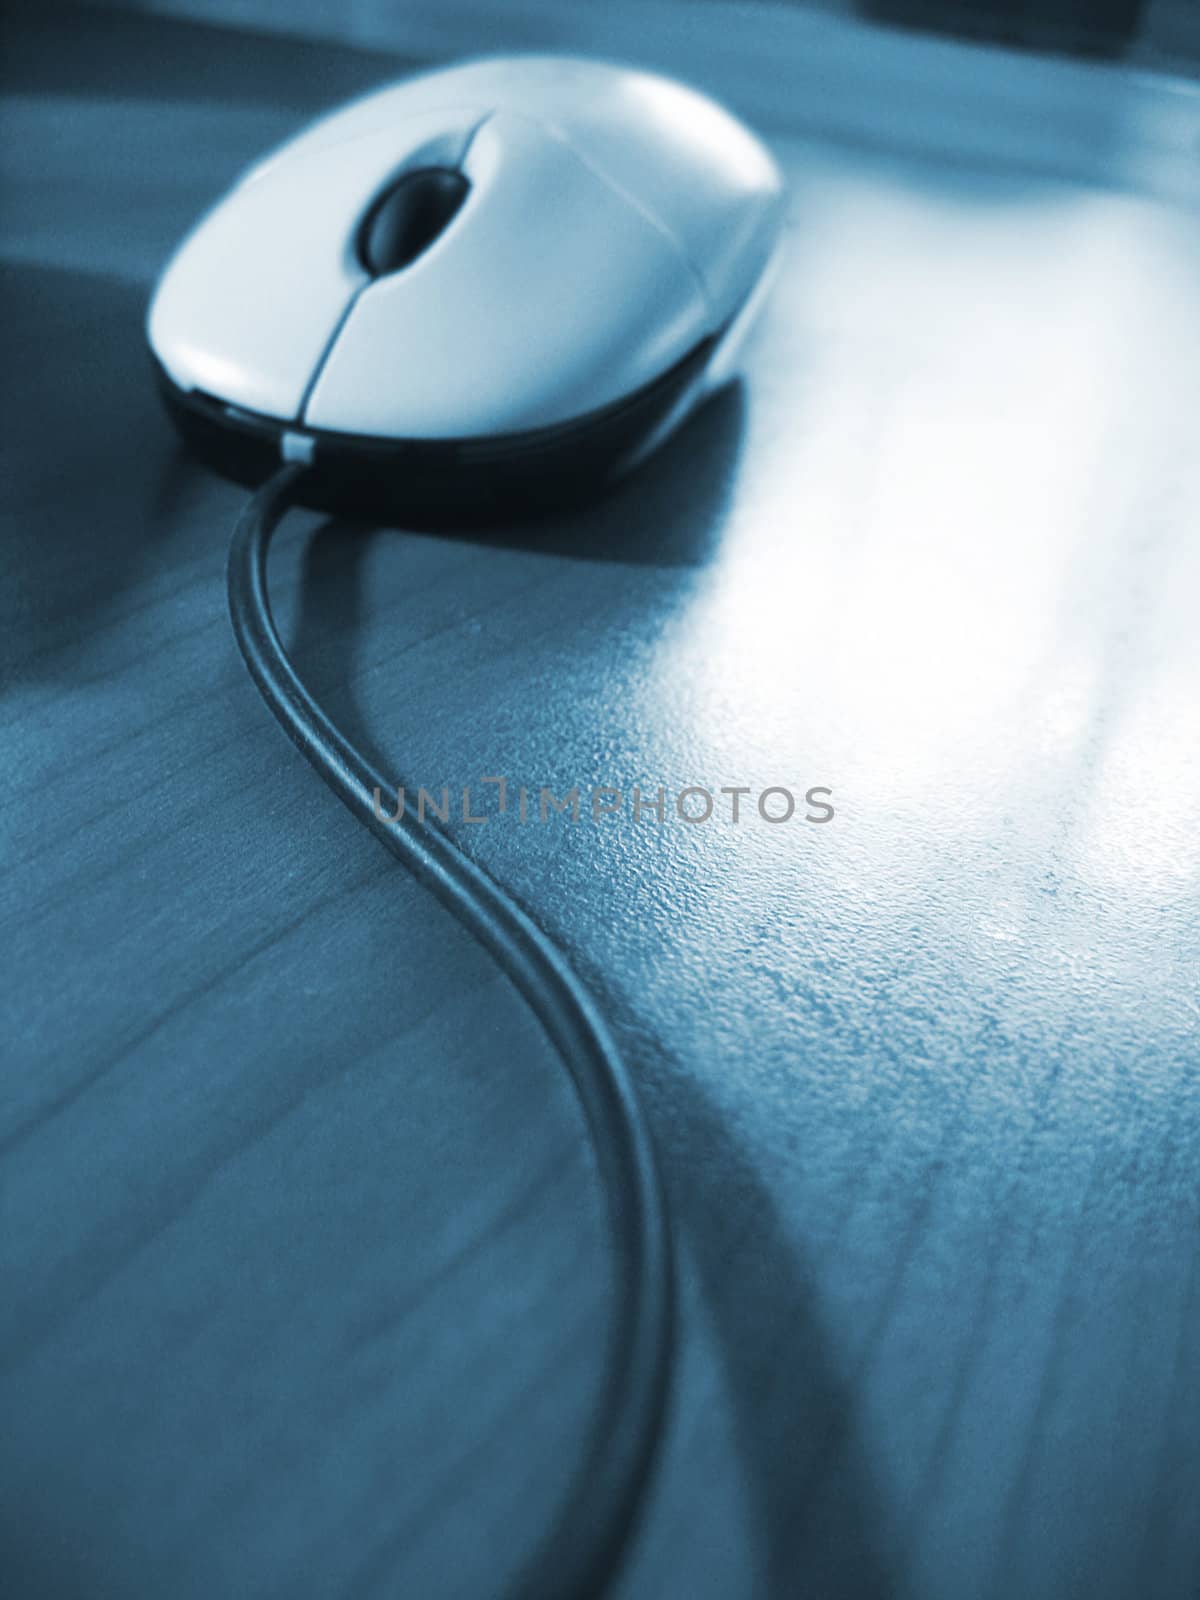 mouse on desk, blue toned image